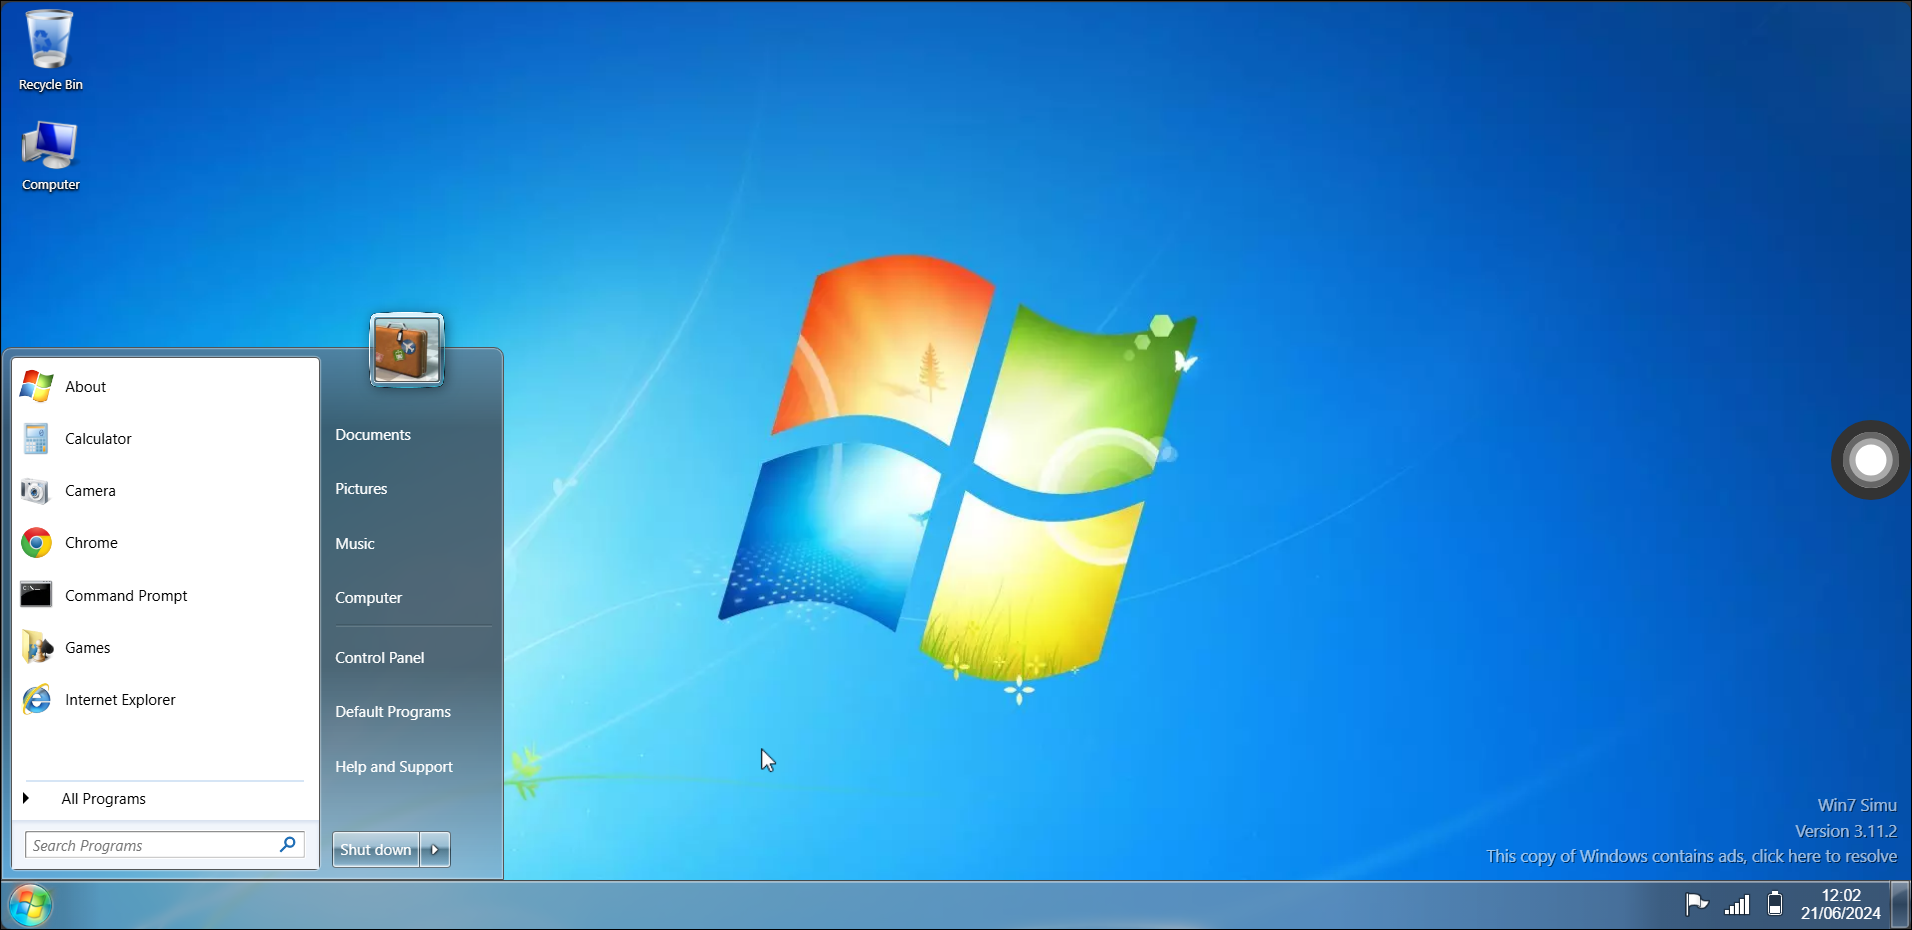 Windows 7 start menu screenshot take from Win7Simu